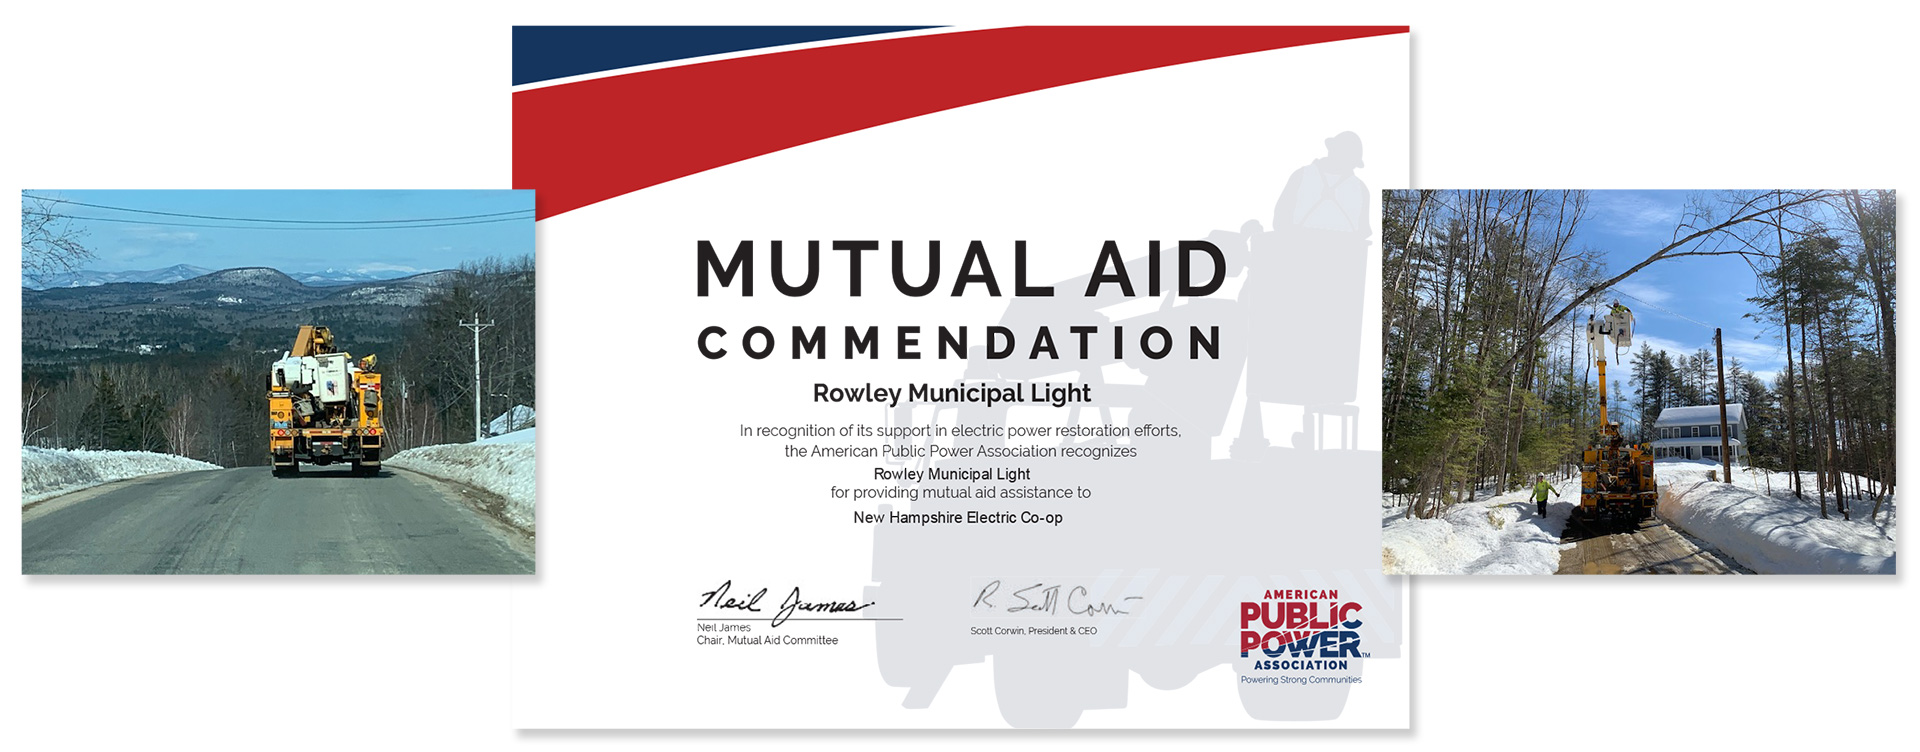 APPA Commendation graphic